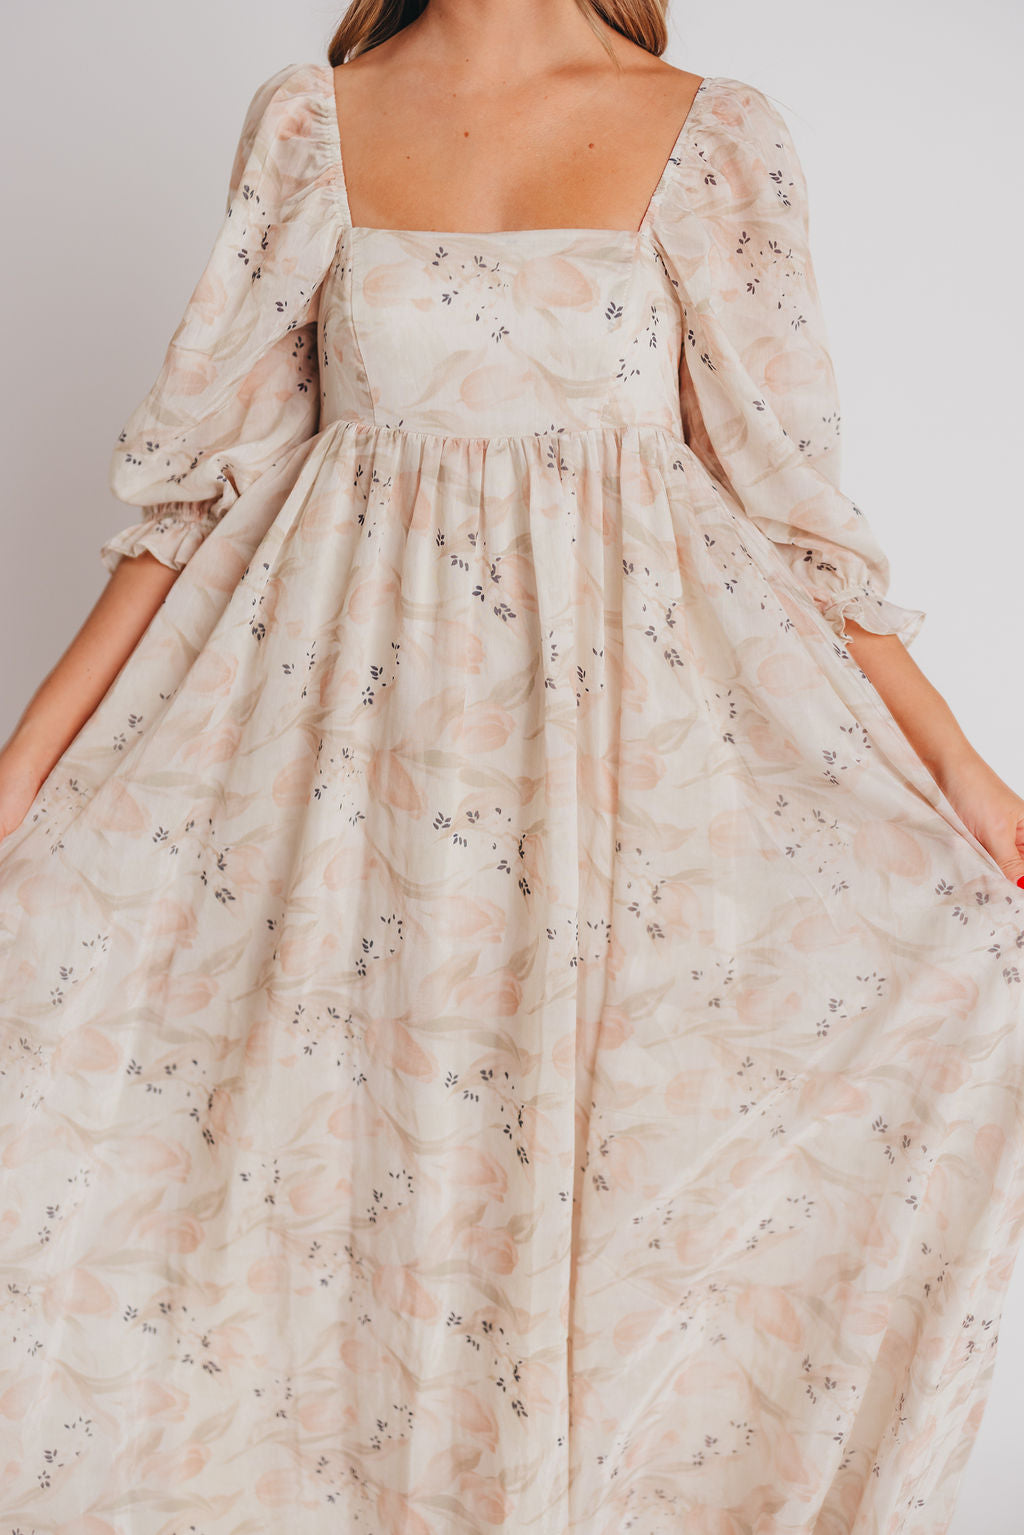 Mona Maxi Dress in Summer Peach & Cream Floral - Bump Friendly Inclusive Sizing (S-3XL)